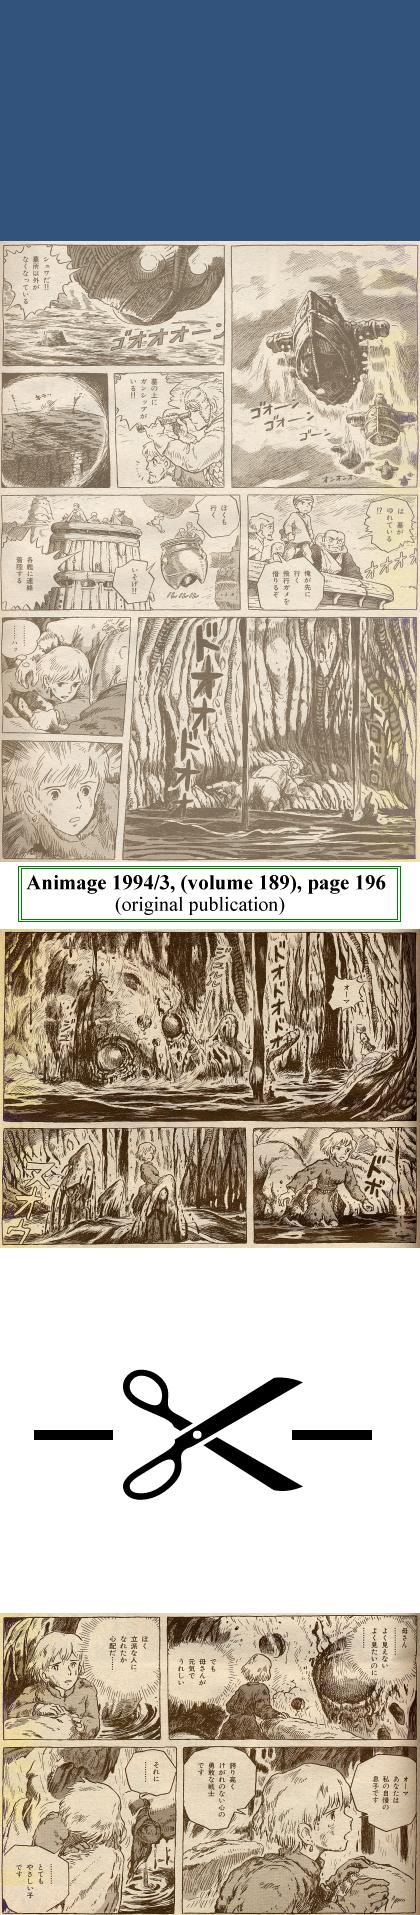 Animage 1994/3, (volume 189), page 196